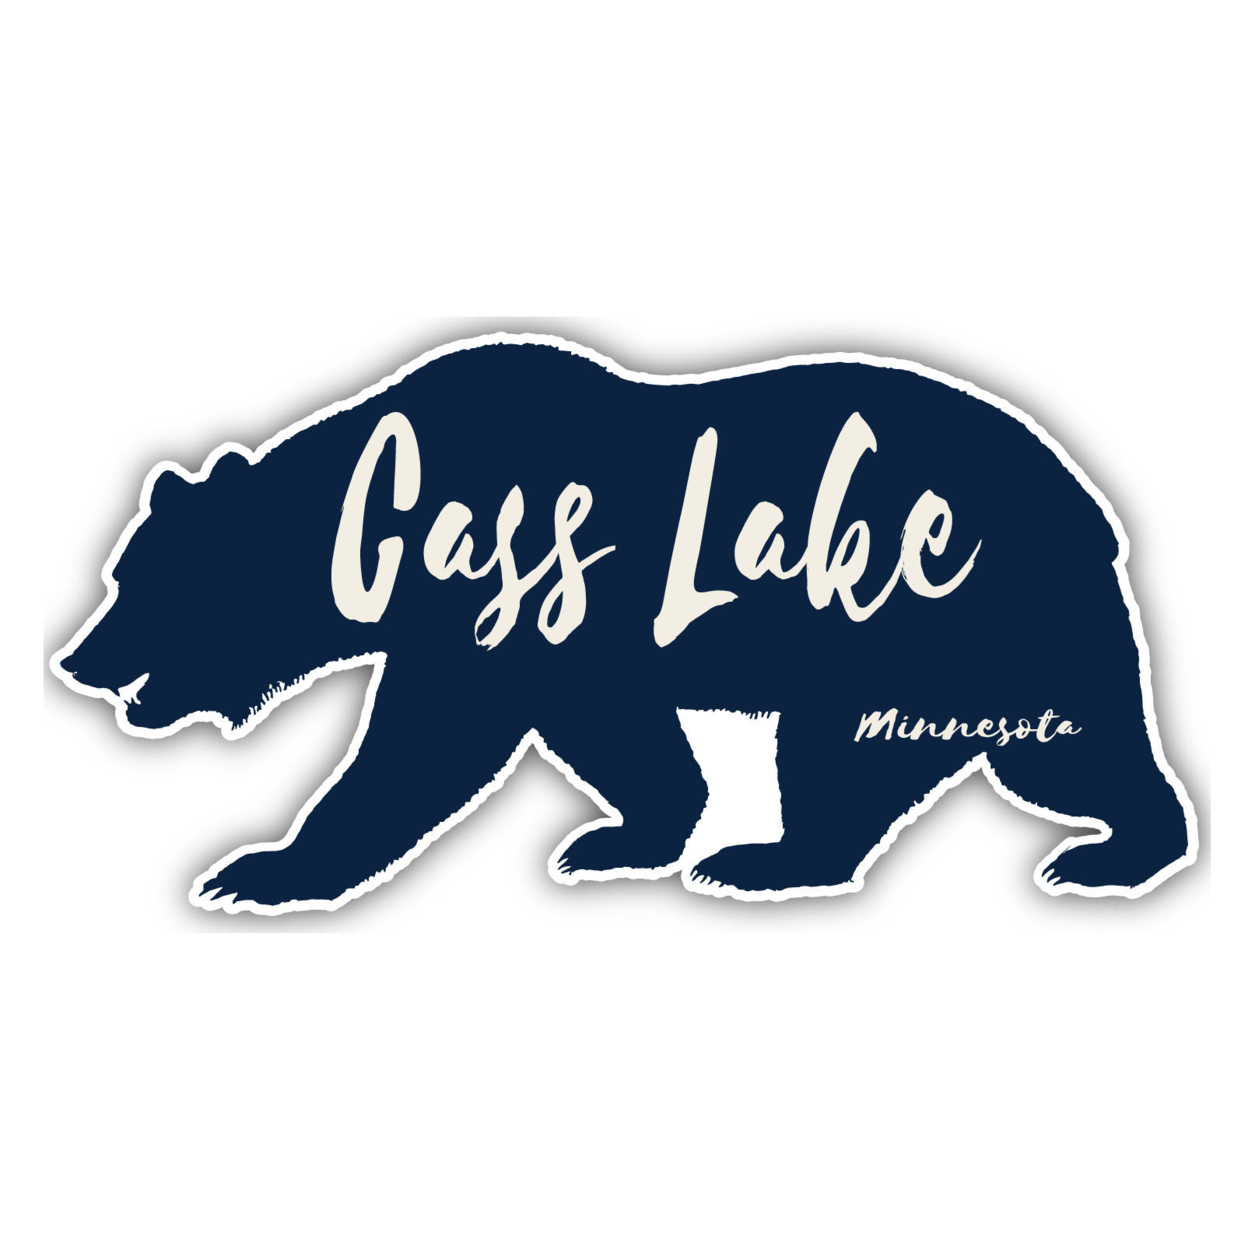 Cass Lake Minnesota Souvenir Decorative Stickers (Choose Theme And Size) - Single Unit, 4-Inch, Tent